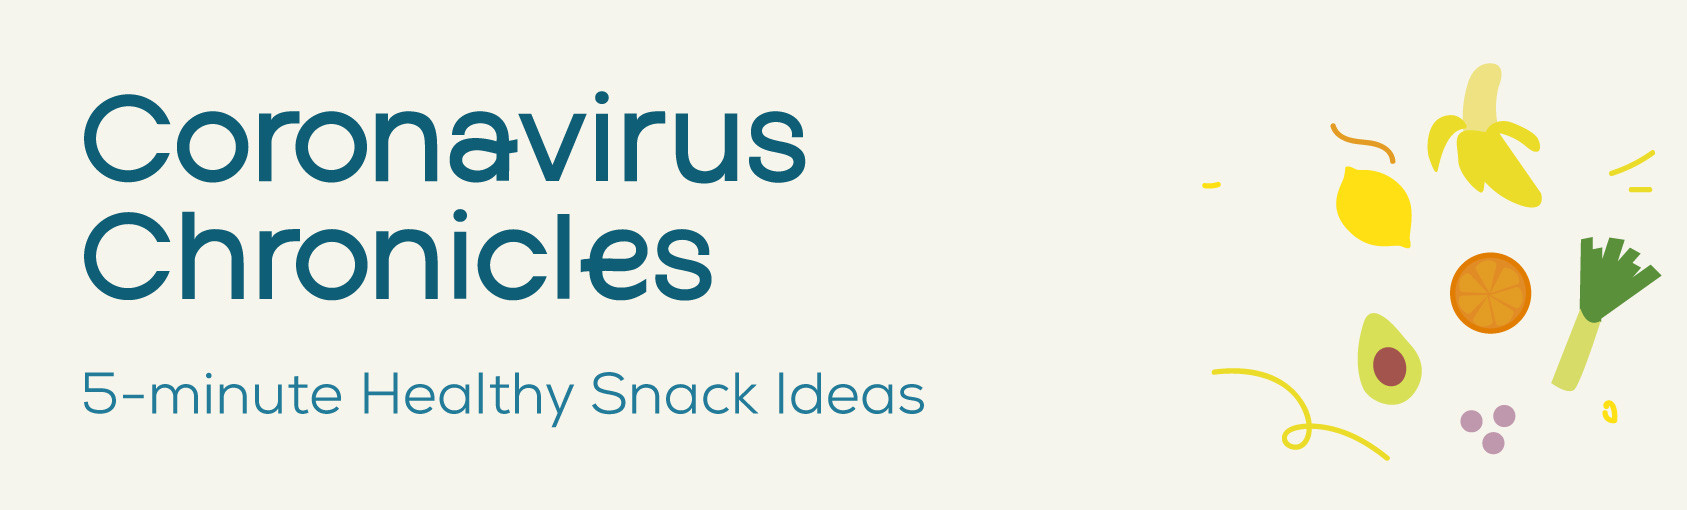 Coronavirus Chronicles: 5-minute Healthy Snack Ideas banner